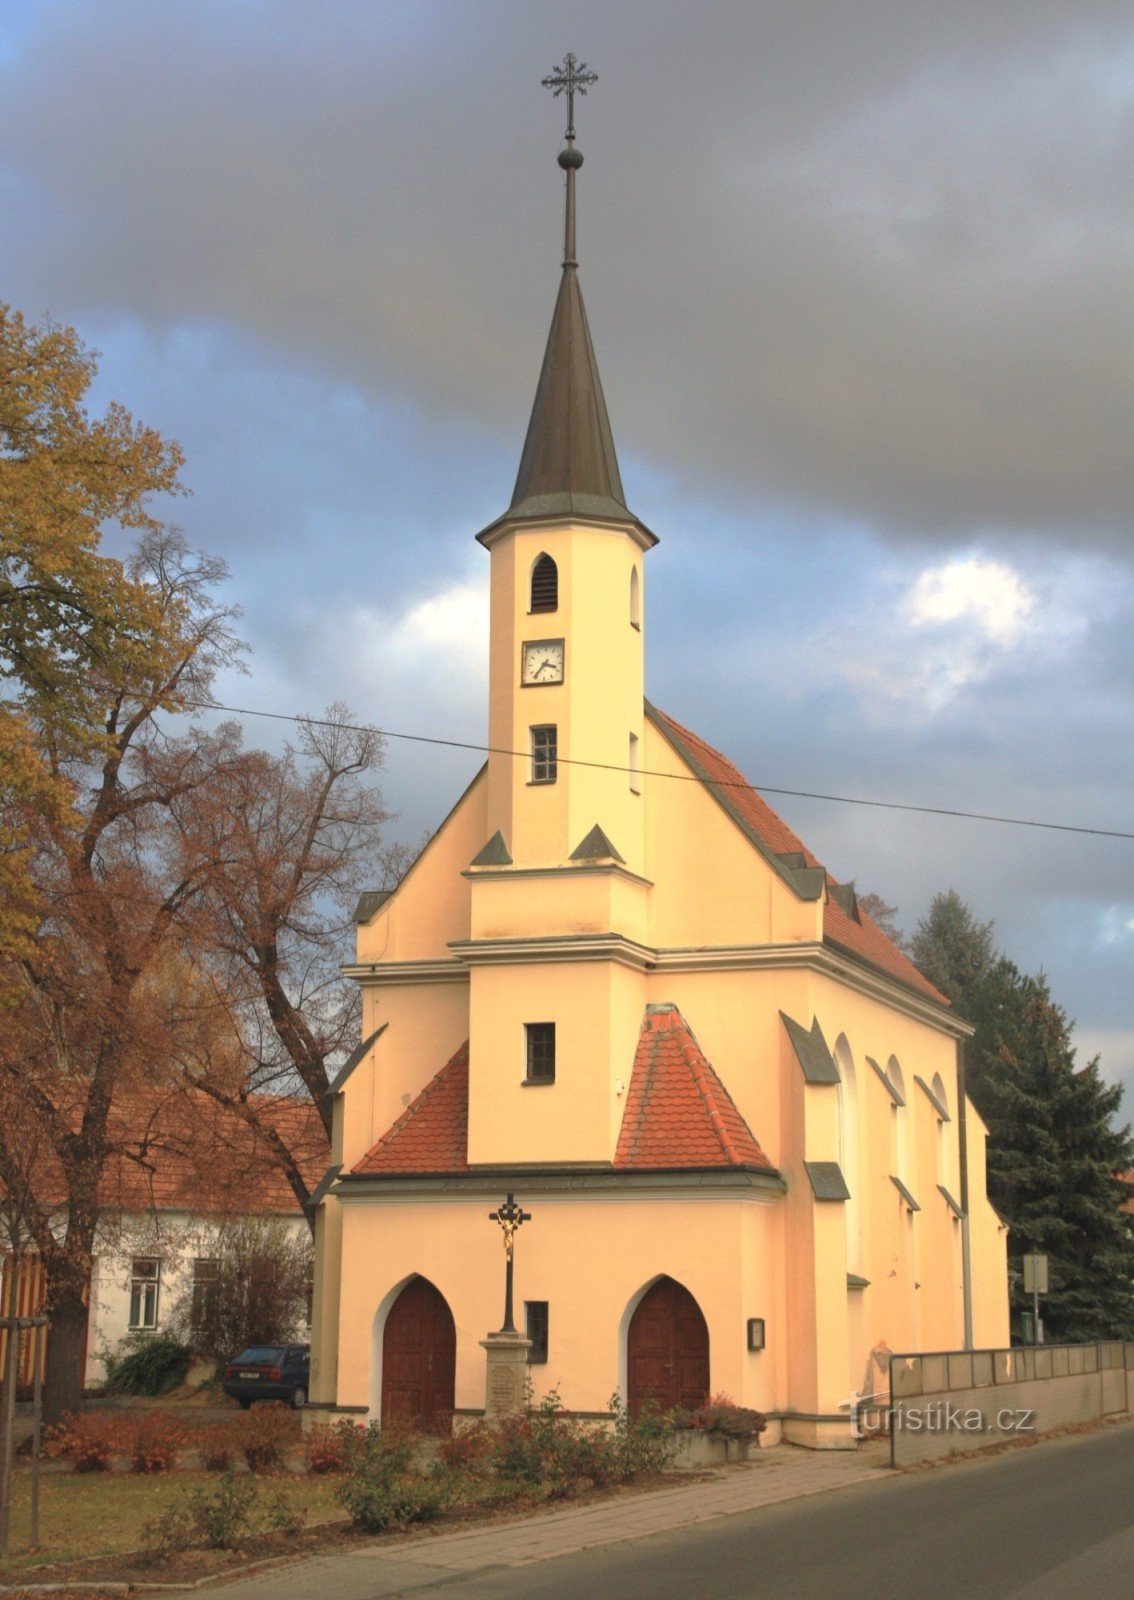 Ostopovice - Chapel of St. John the Baptist